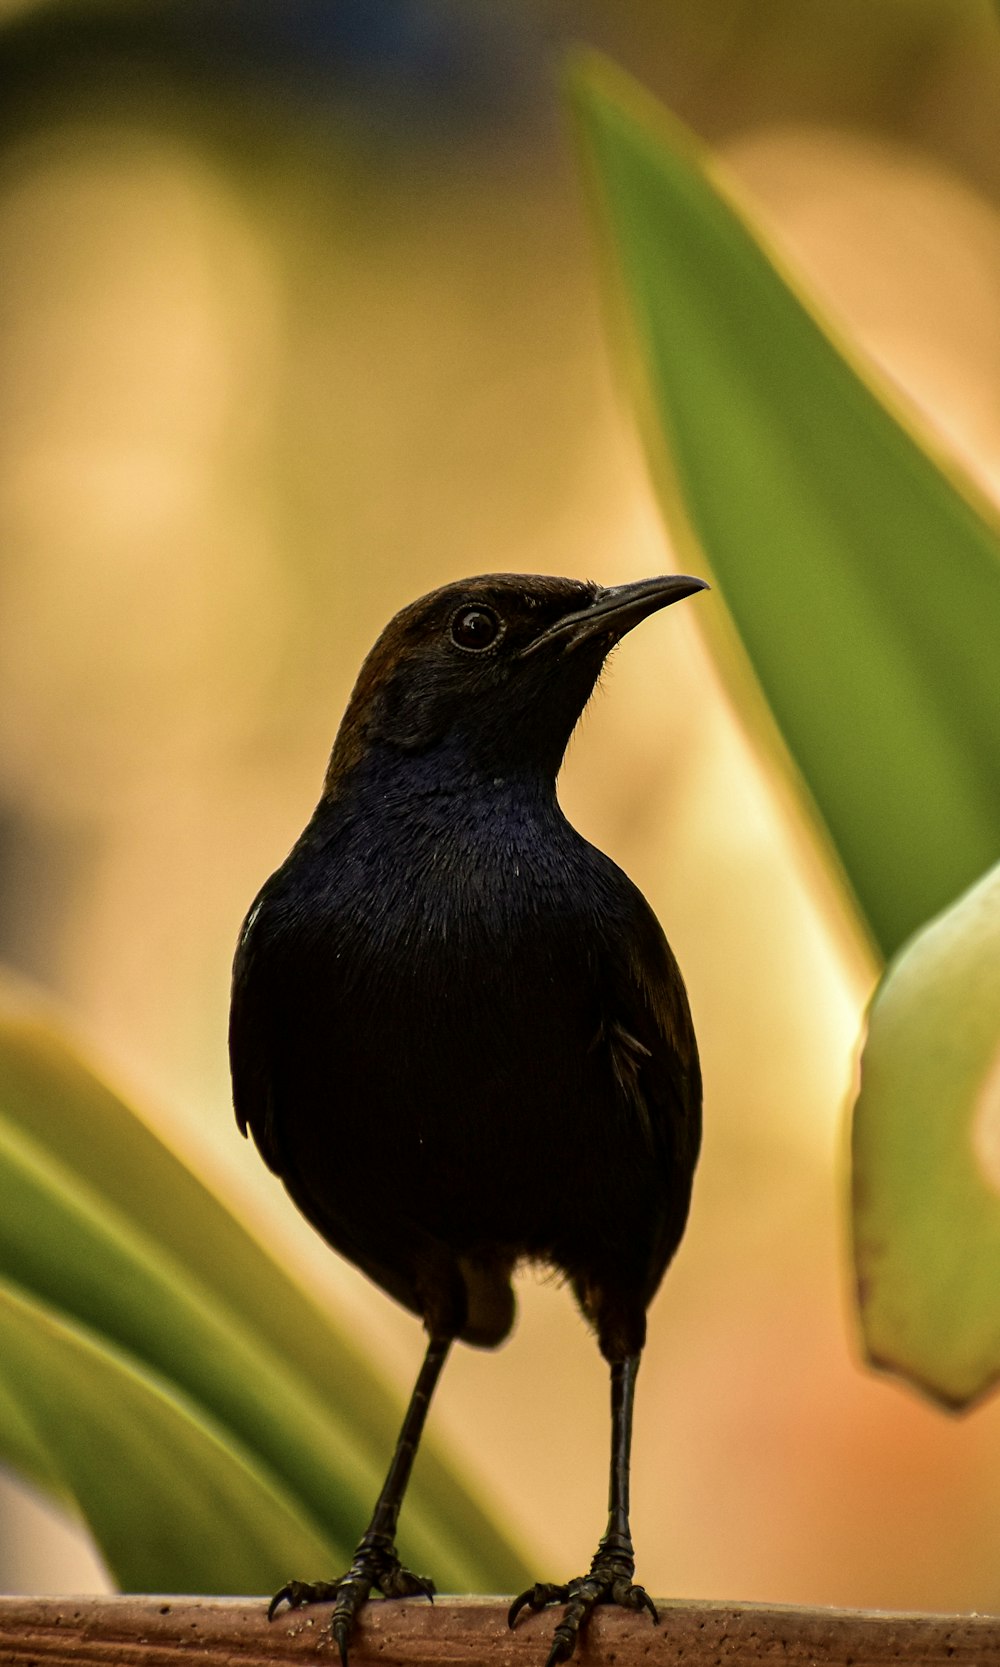 black bird on green plant